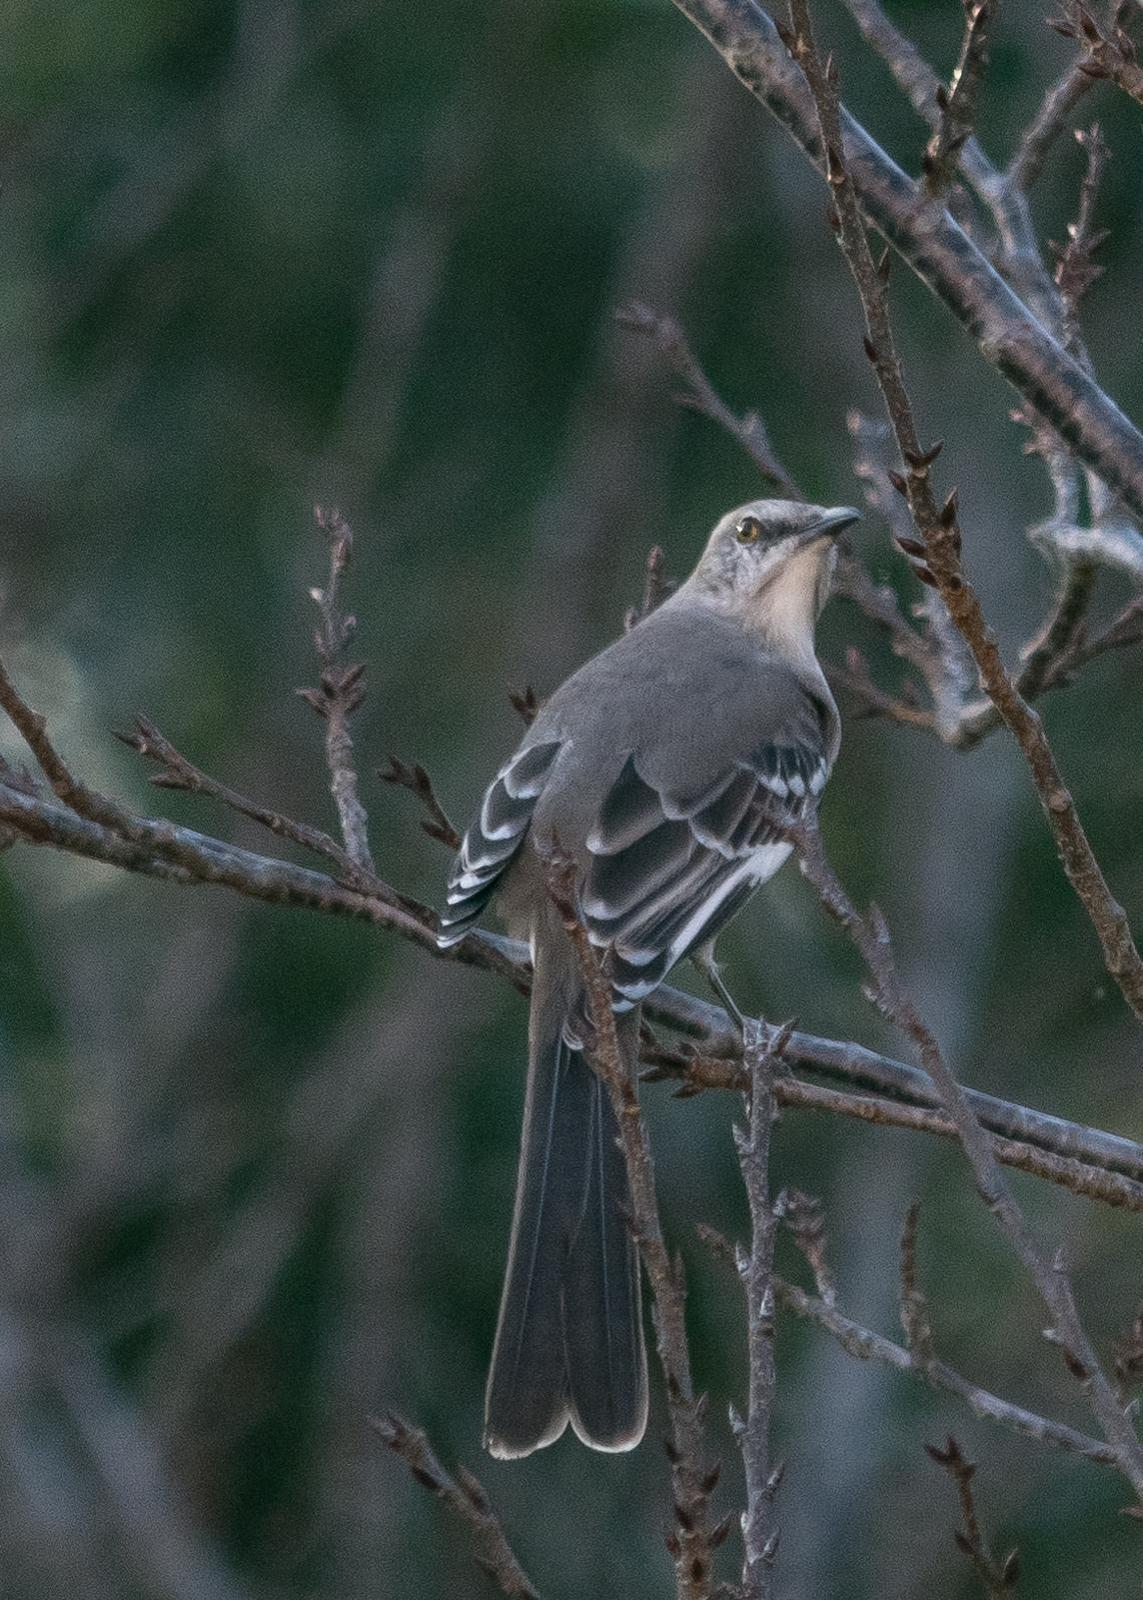 Northern Mockingbird Photo by Keshava Mysore